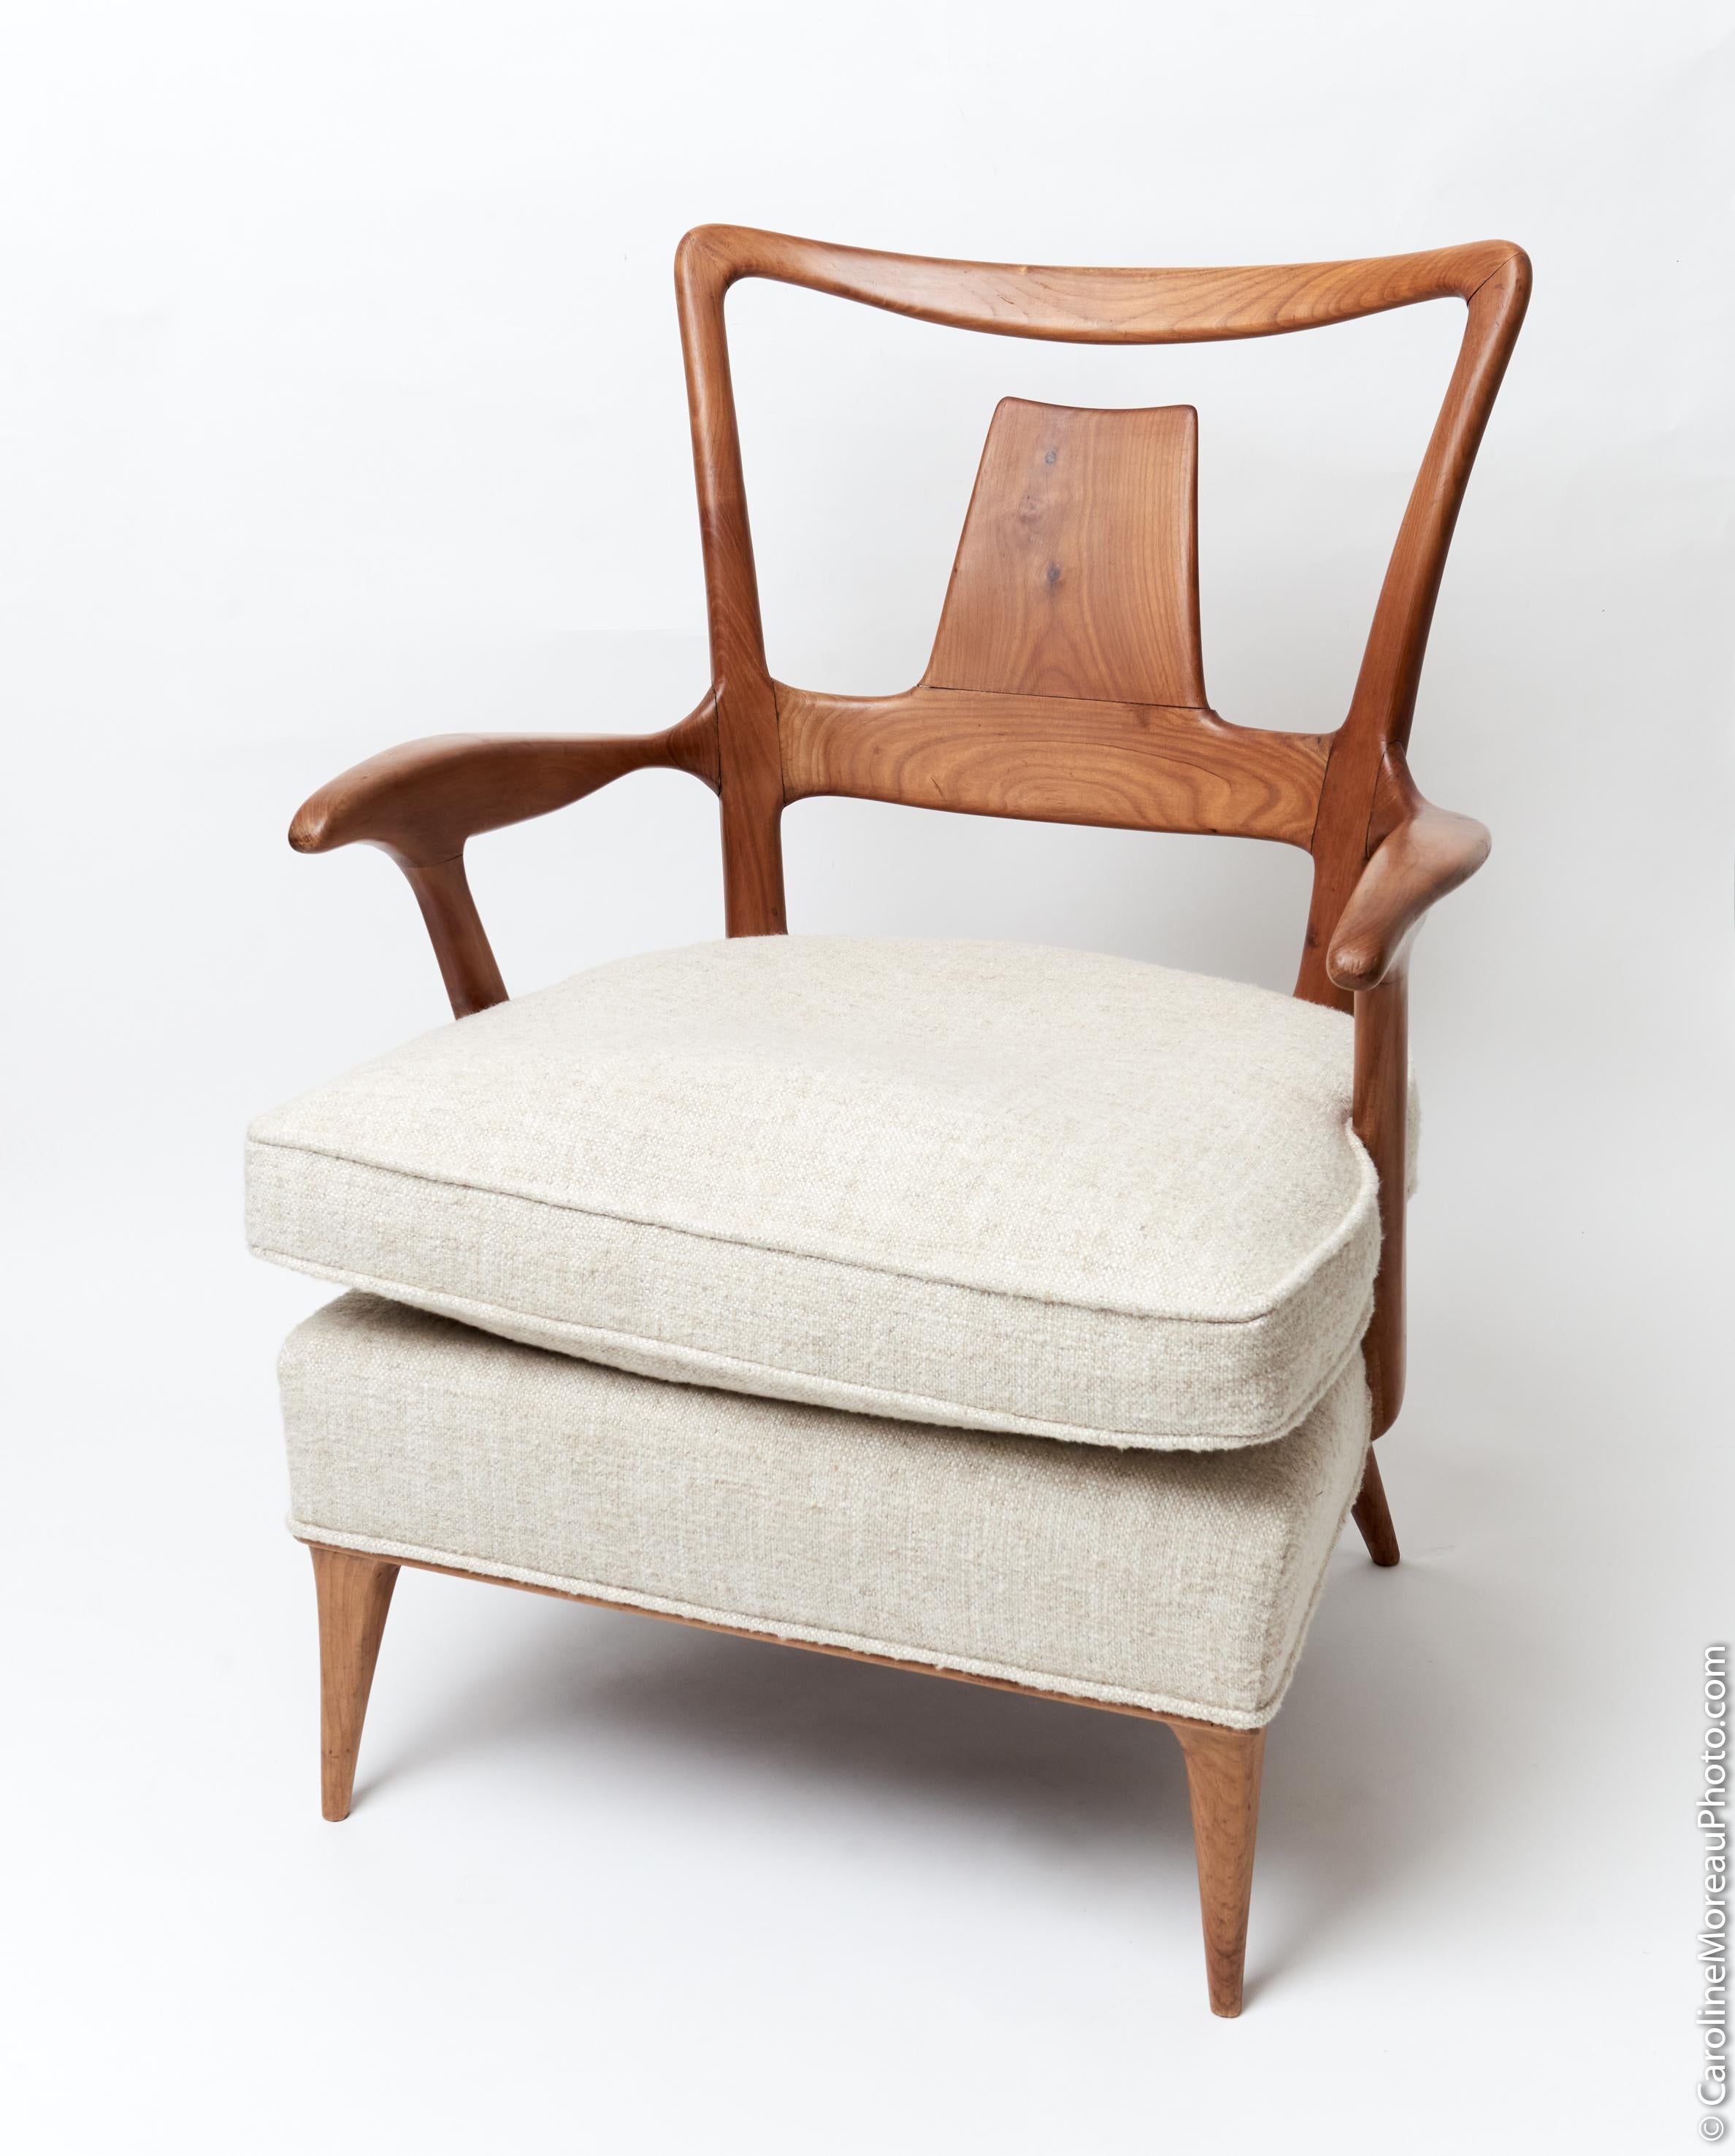 Elegant Armchair / Lounge chair : attribution Enrico Ciuti, Italy, circa 1940.
Walnut wood and new wool upholstery (Pierre Frey). 
    